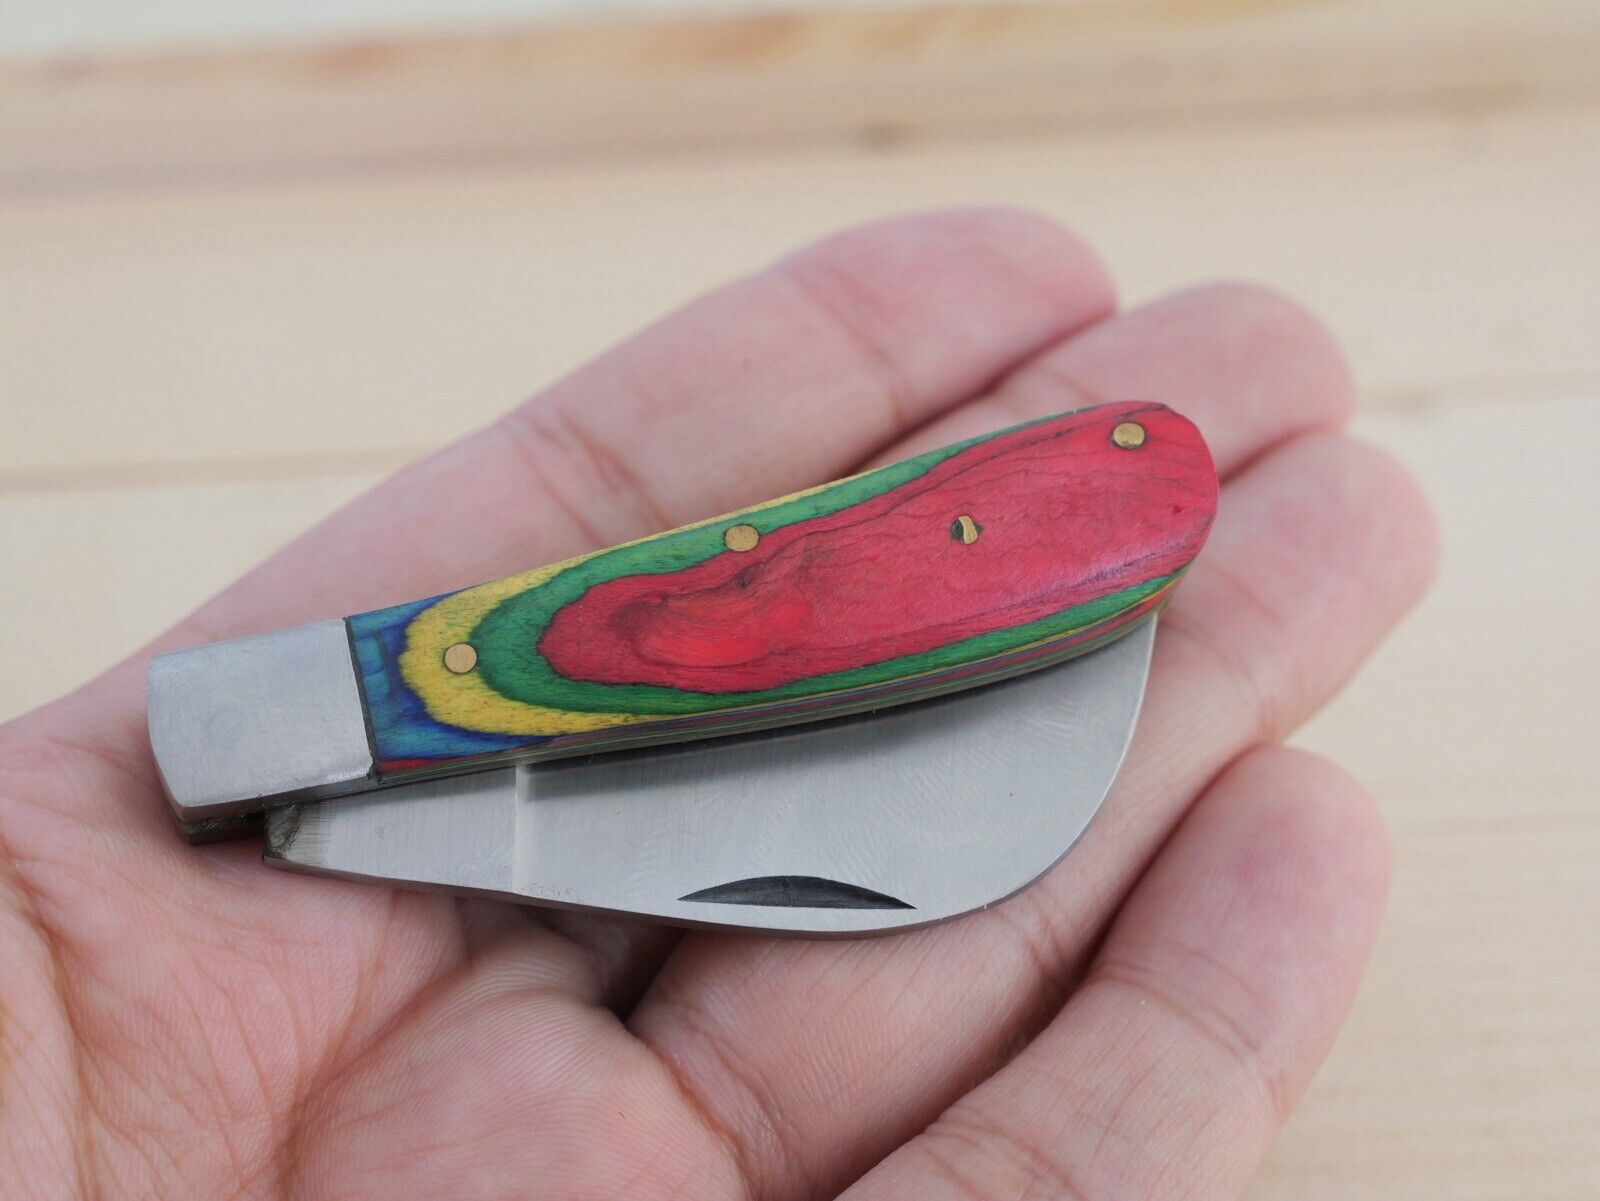 Mini Hawks Bill knife 3” Overall Vintage Style Manual Folding Knife Sharp Wood